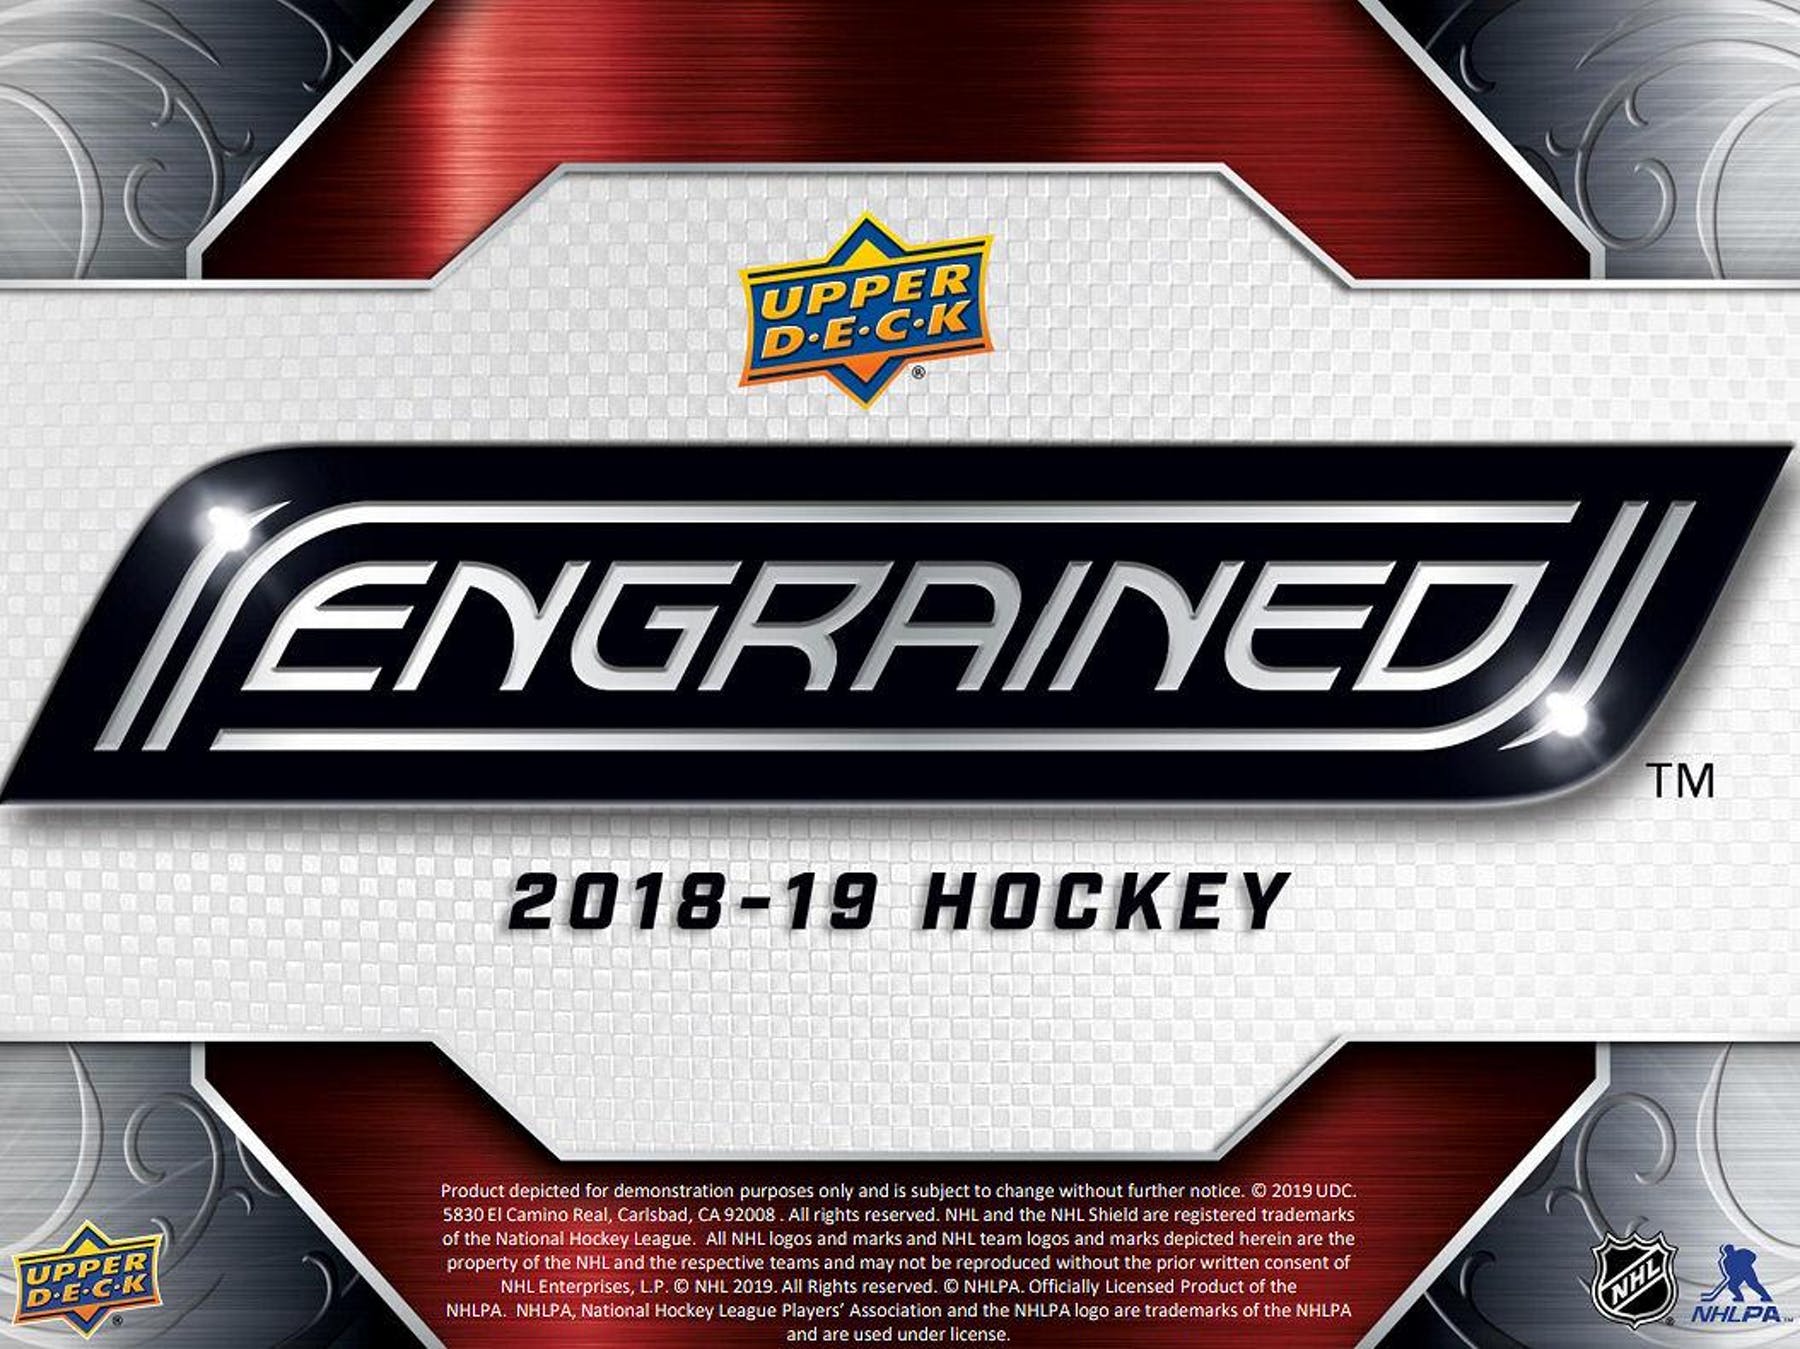 2018-19 Upper Deck Engrained Hockey Hobby Box - BigBoi Cards